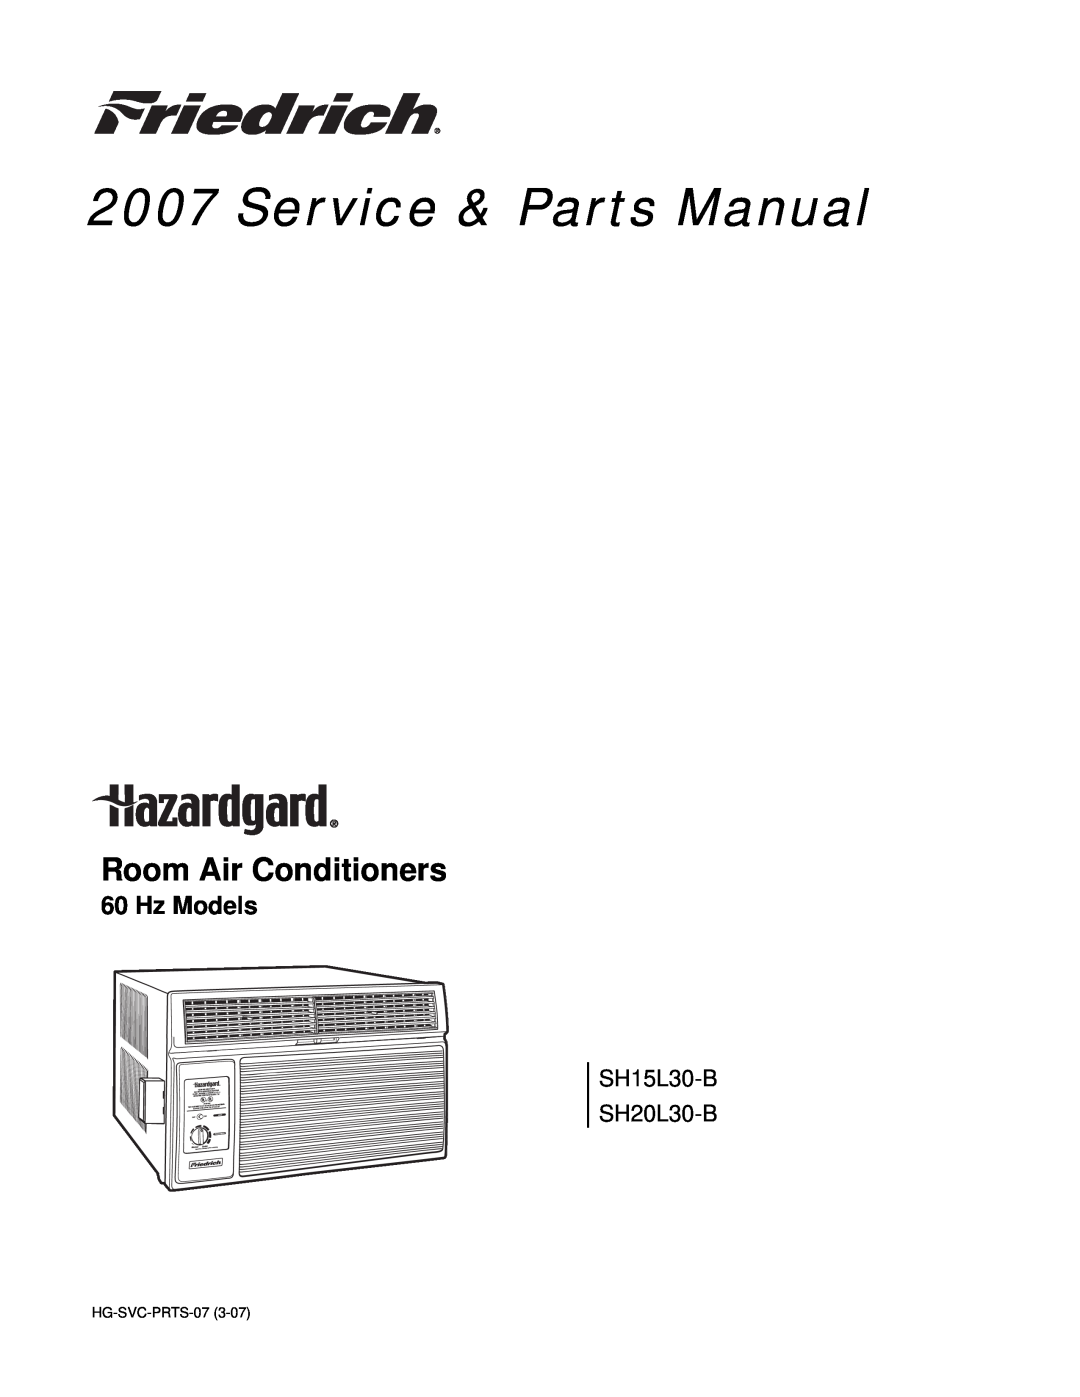 Friedrich 60 Hz manual Room Air Conditioners, Service & Parts Manual, Hz Models, SH15L30-B SH20L30-B 